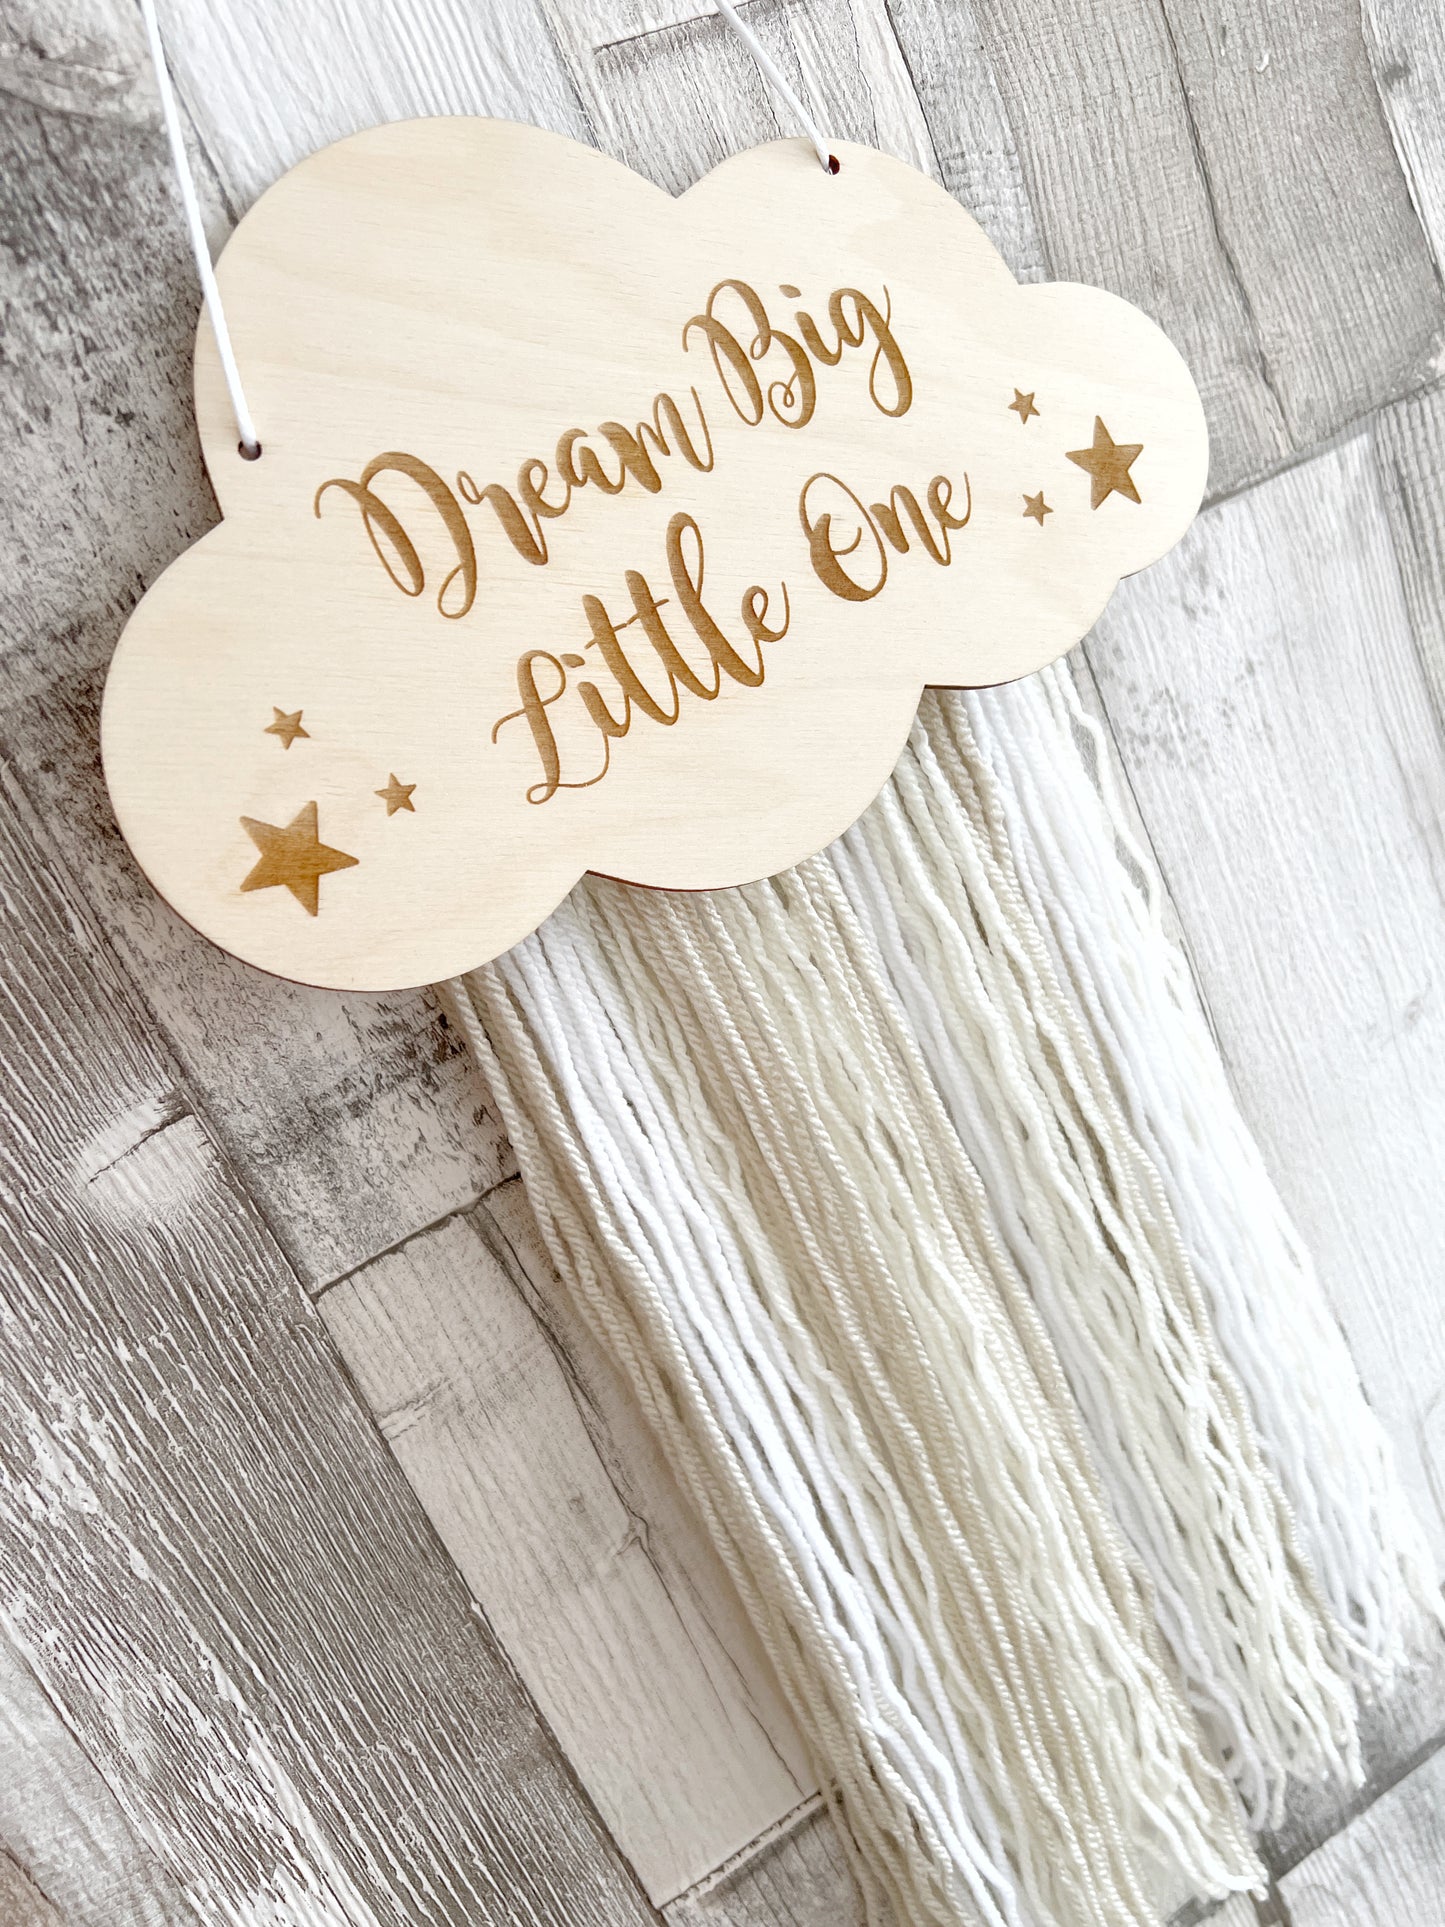 Dream Big Little One Engraved Cloud Wall Hanger - Beige, Cream & White